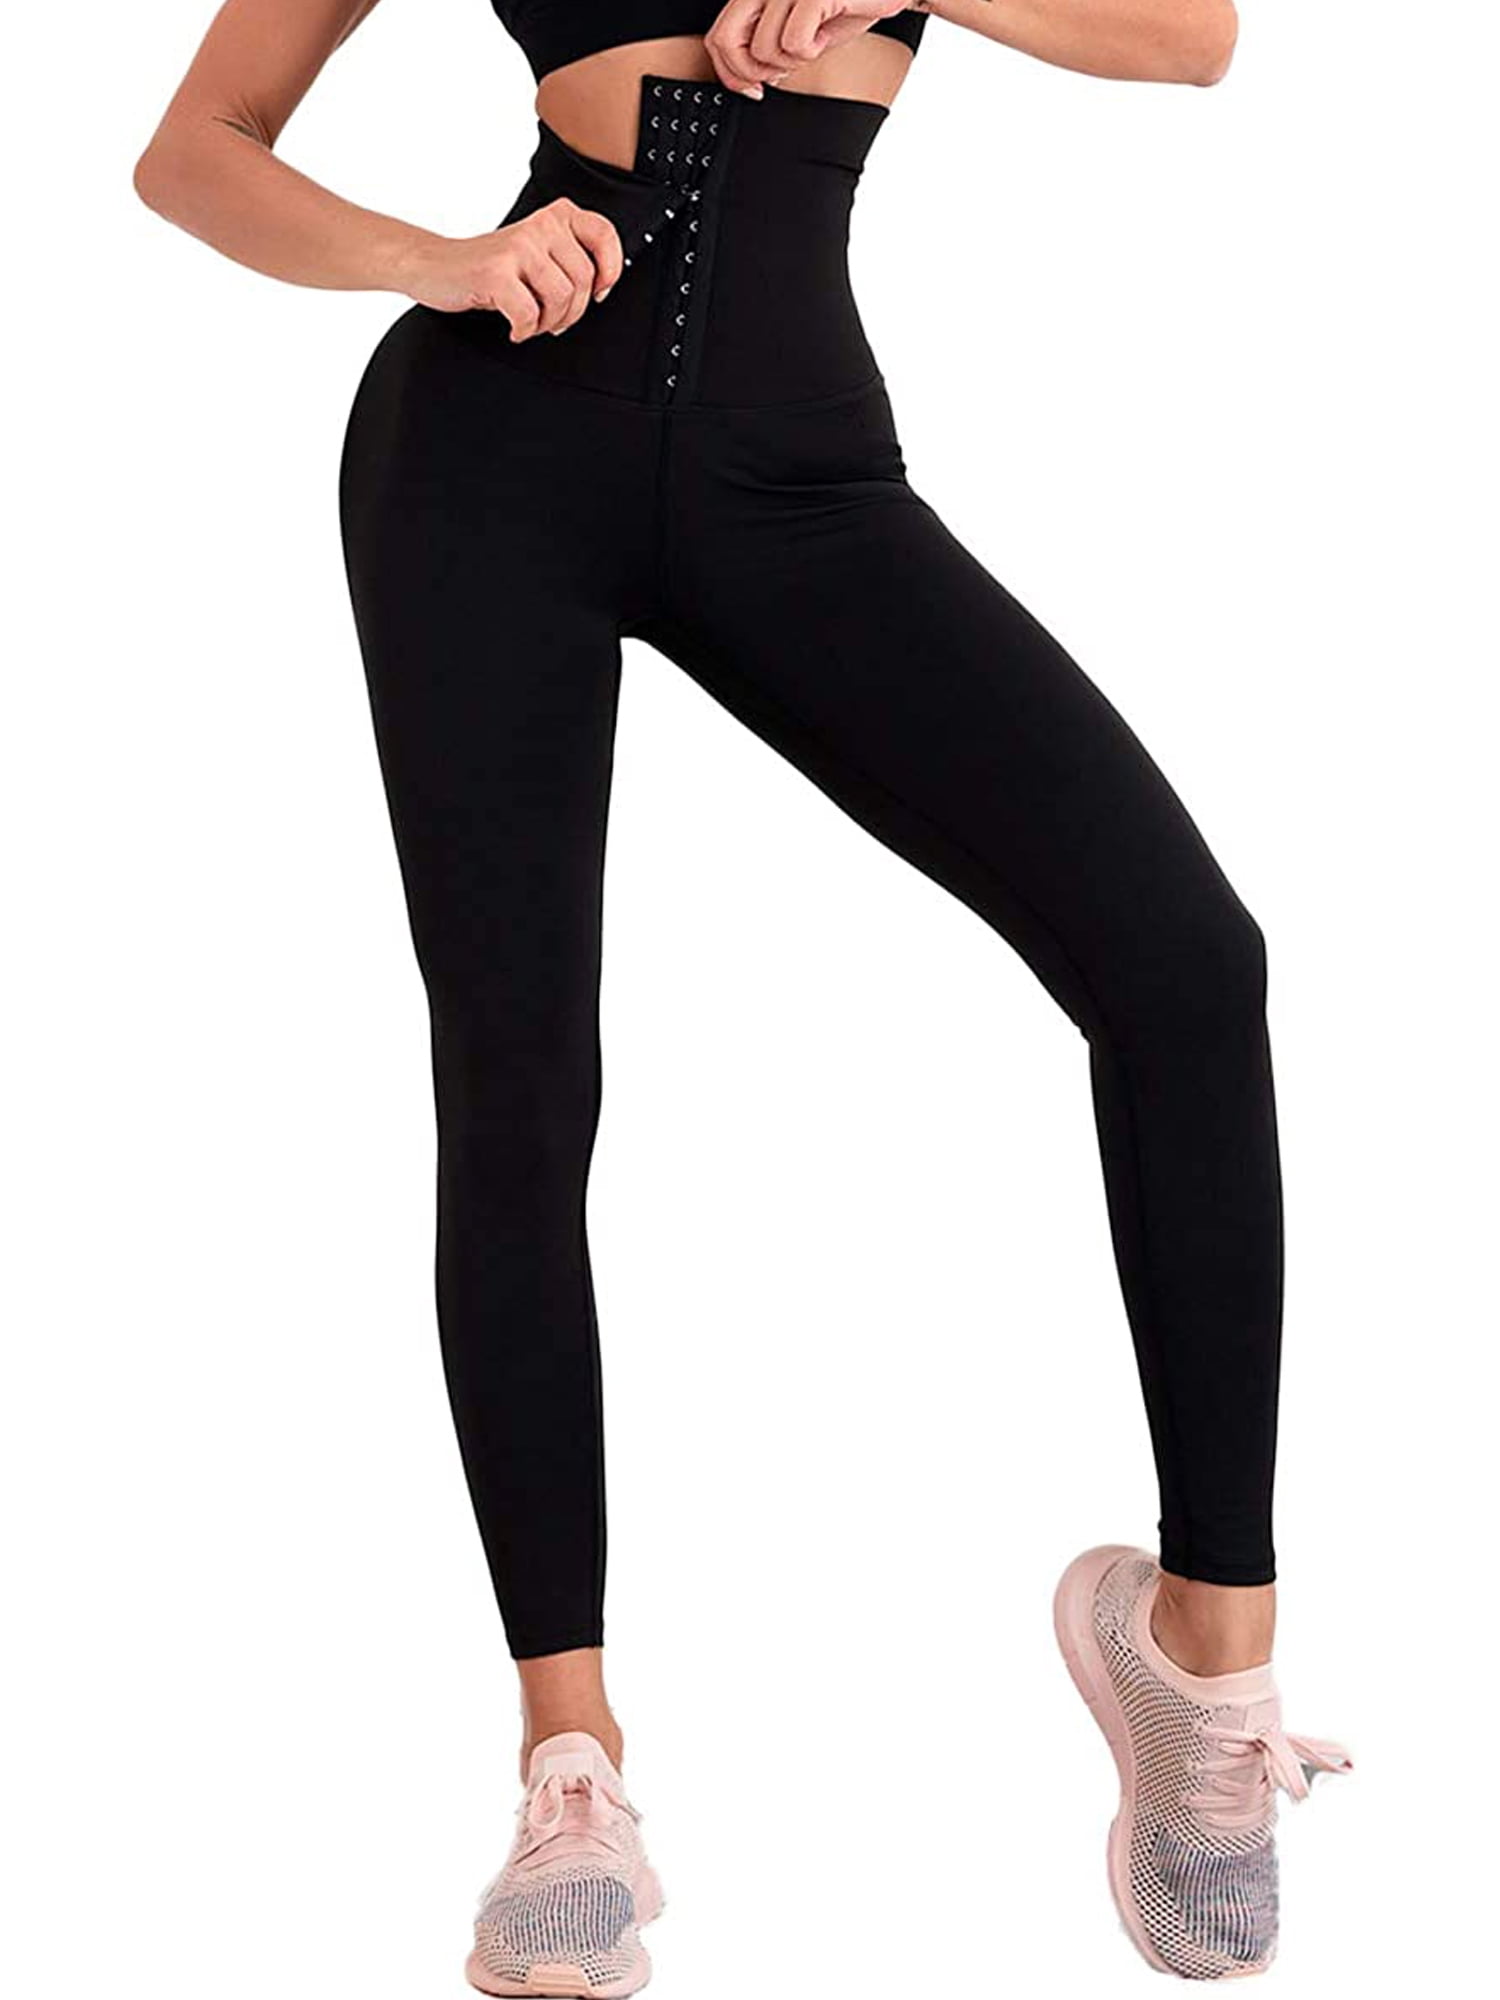 bvgfsahne Women'S Print Yoga Pants Tummy Control Slimming Booty Leggings  Skinny Pants For Yoga Running Pilates Gym Workout Running 